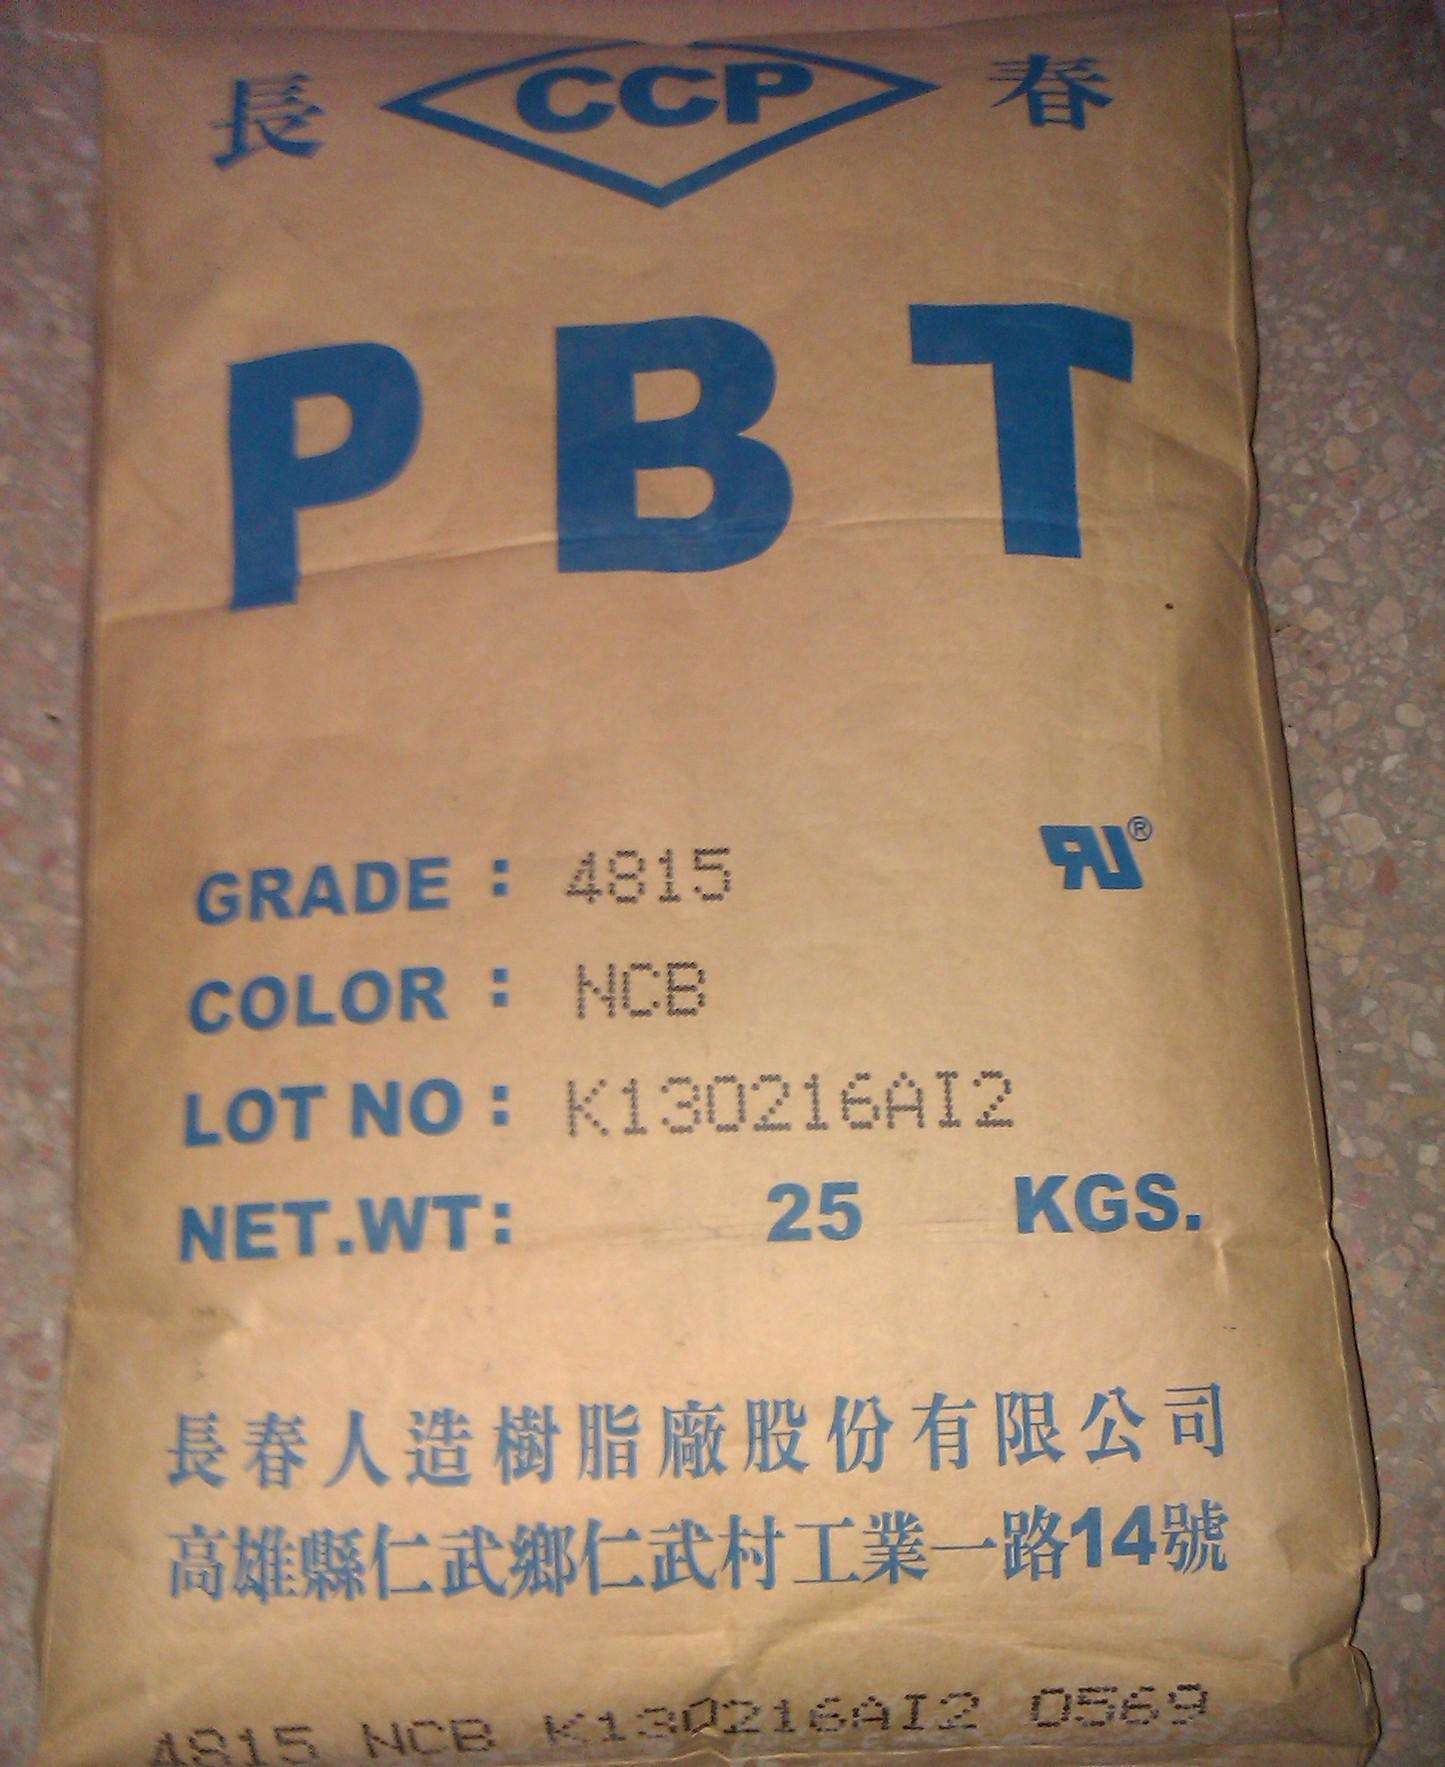 PBT 中国台湾长春 4820BK 易成型 PBT